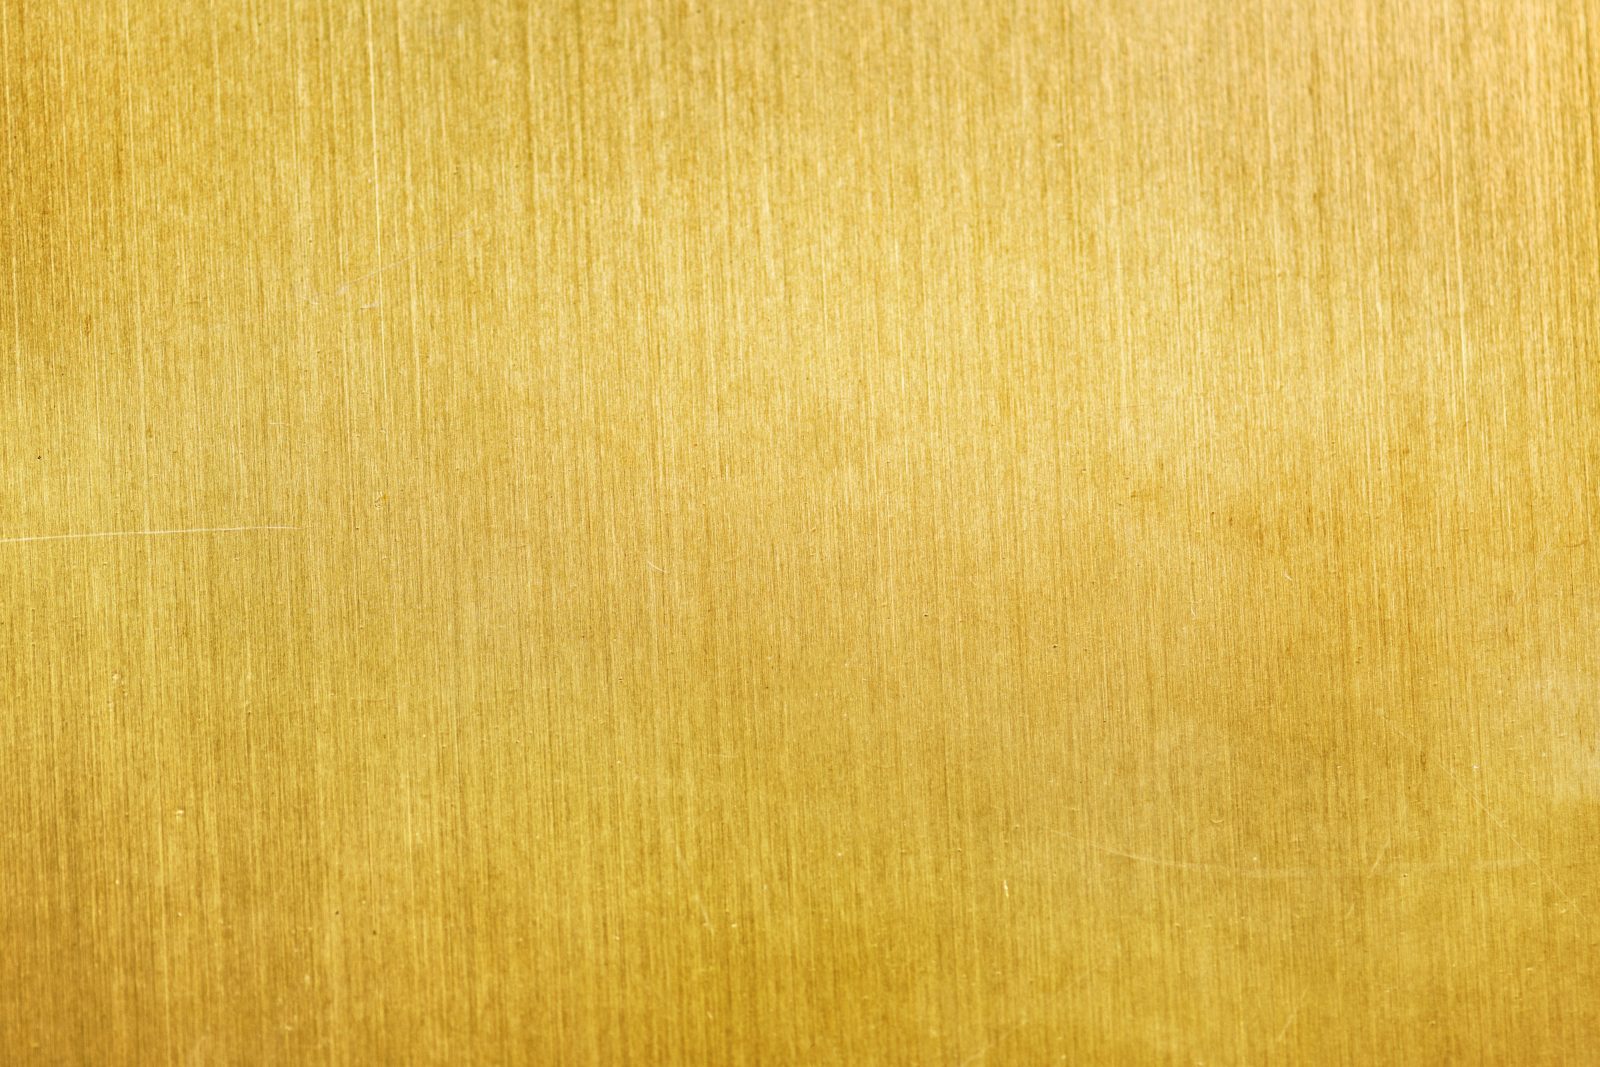 papel de aluminio,amarillo,madera,naranja,marrón,beige